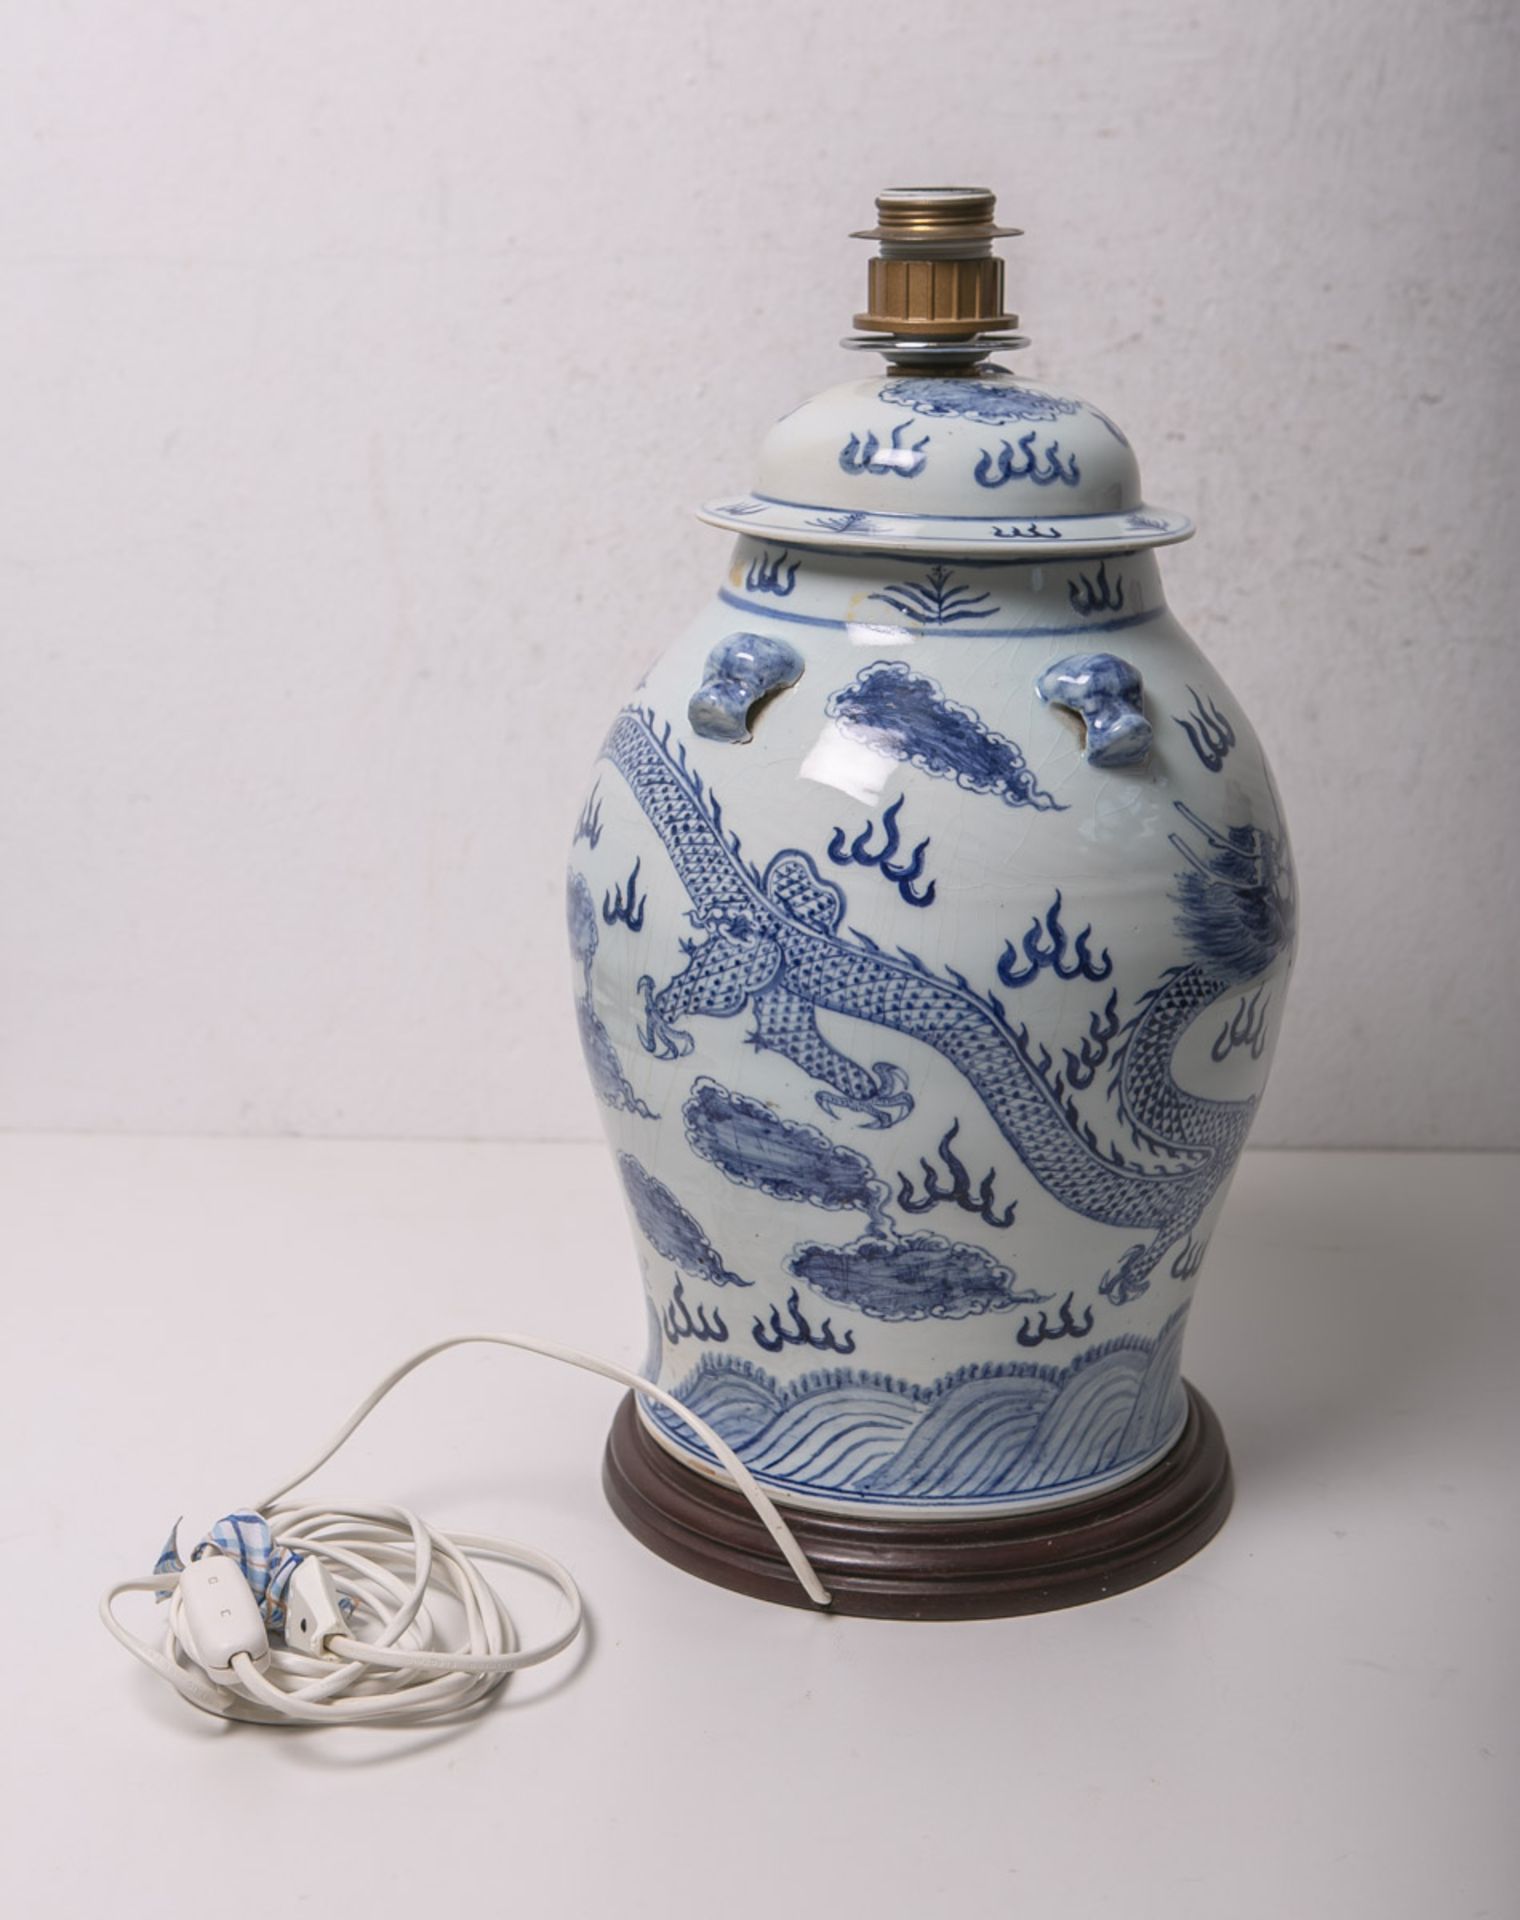 Zur Lampe umgebaute Vase (China, wohl